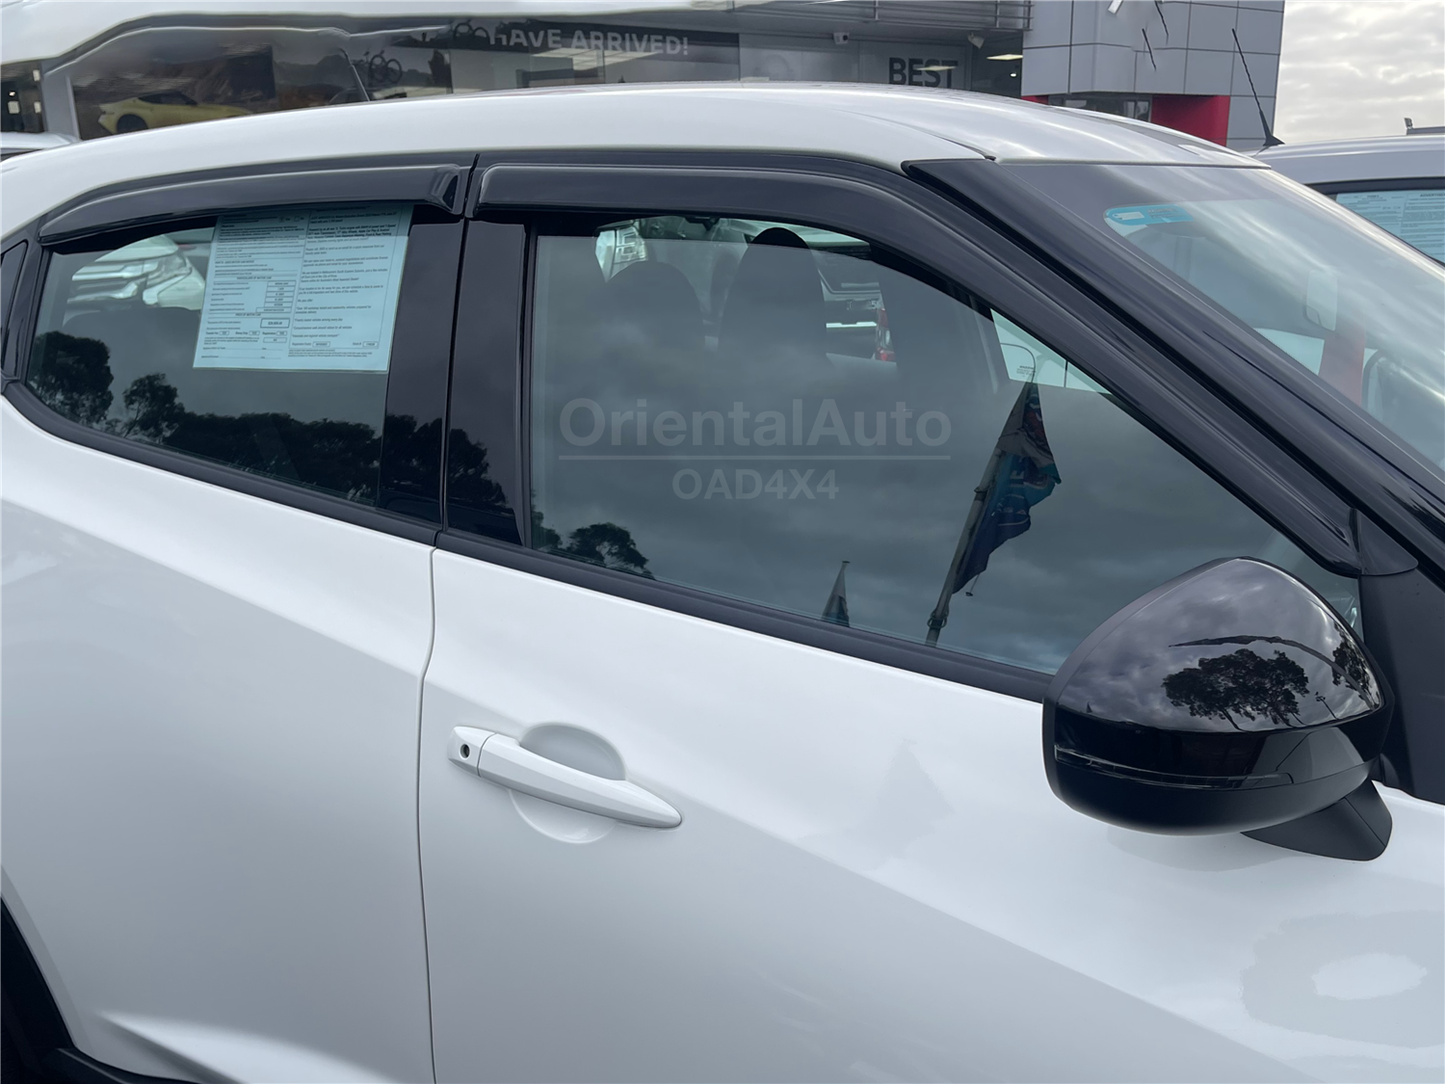 Luxury Weathershields For Nissan Juke 2020+ Weather Shields Window Visors